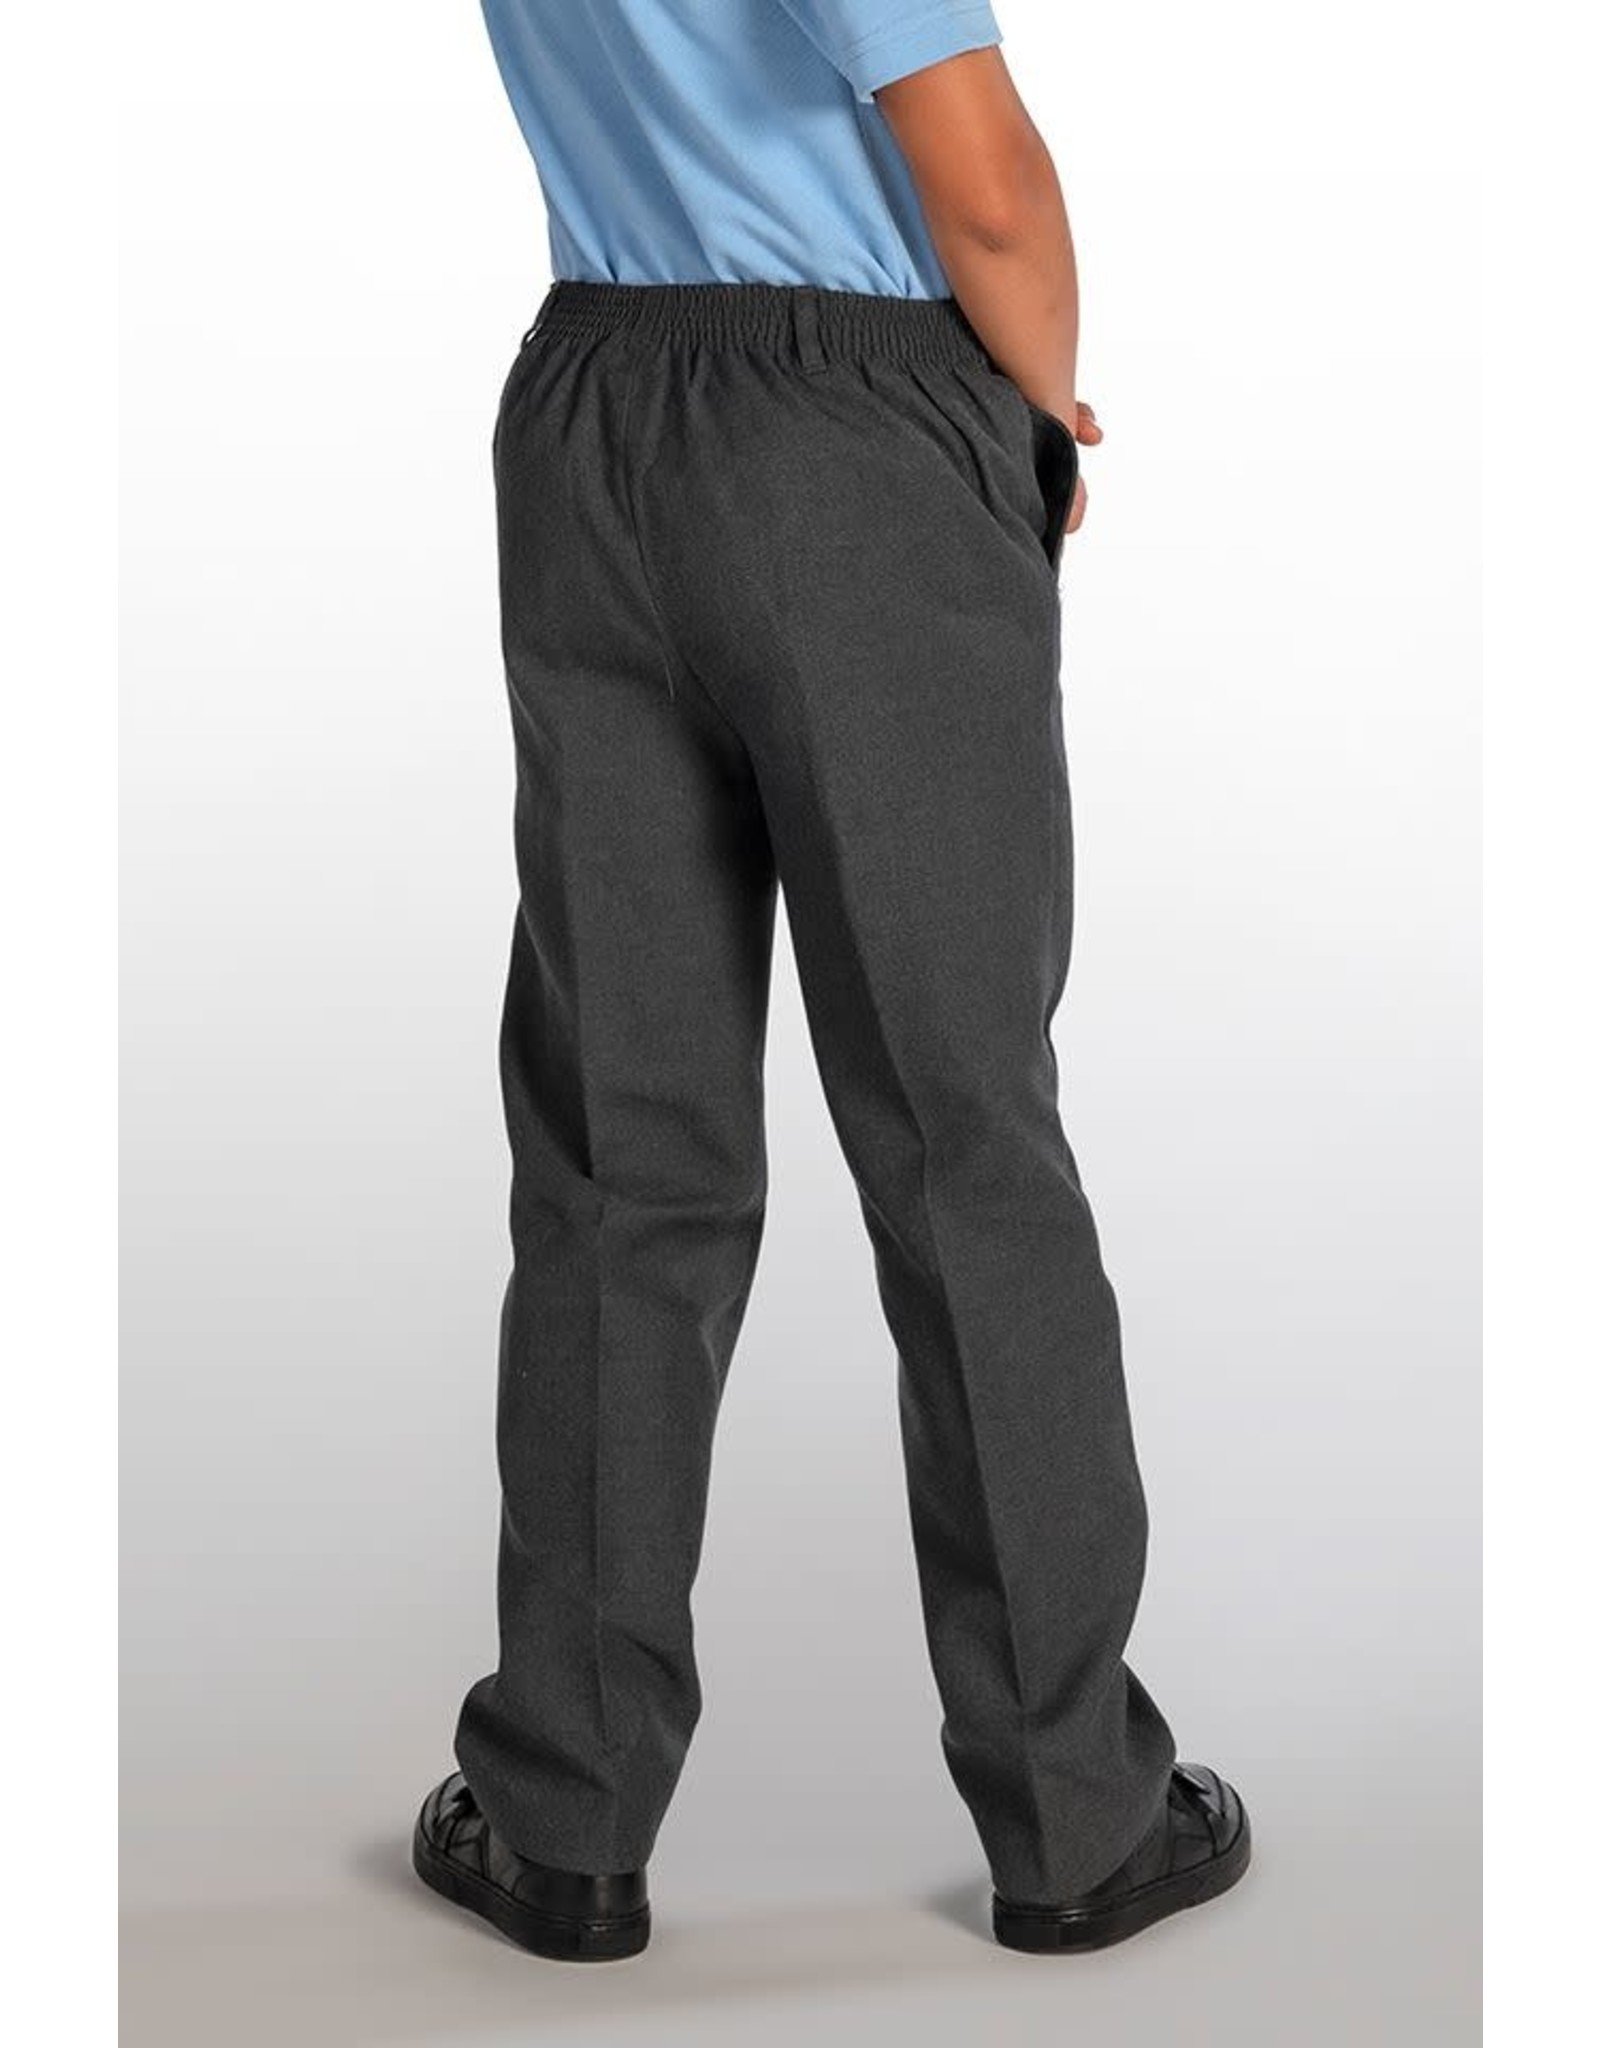 Junior - Classic Fit Pants - elastic back waistband - Gryphon Door Store